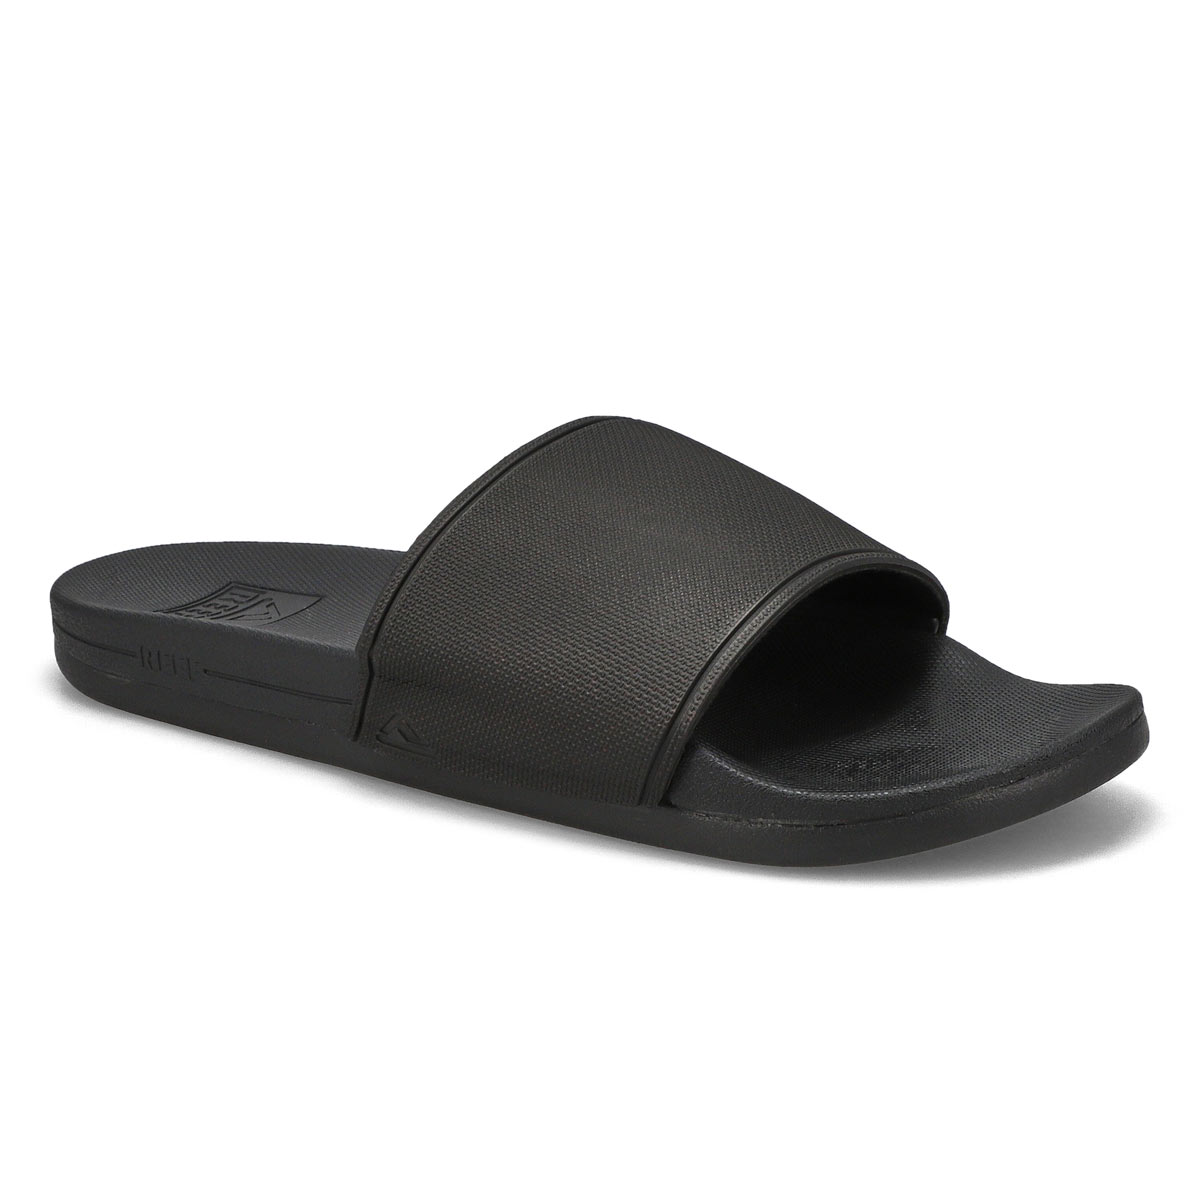 Reef Men's Cushion Slide Sandal - Black | SoftMoc.com